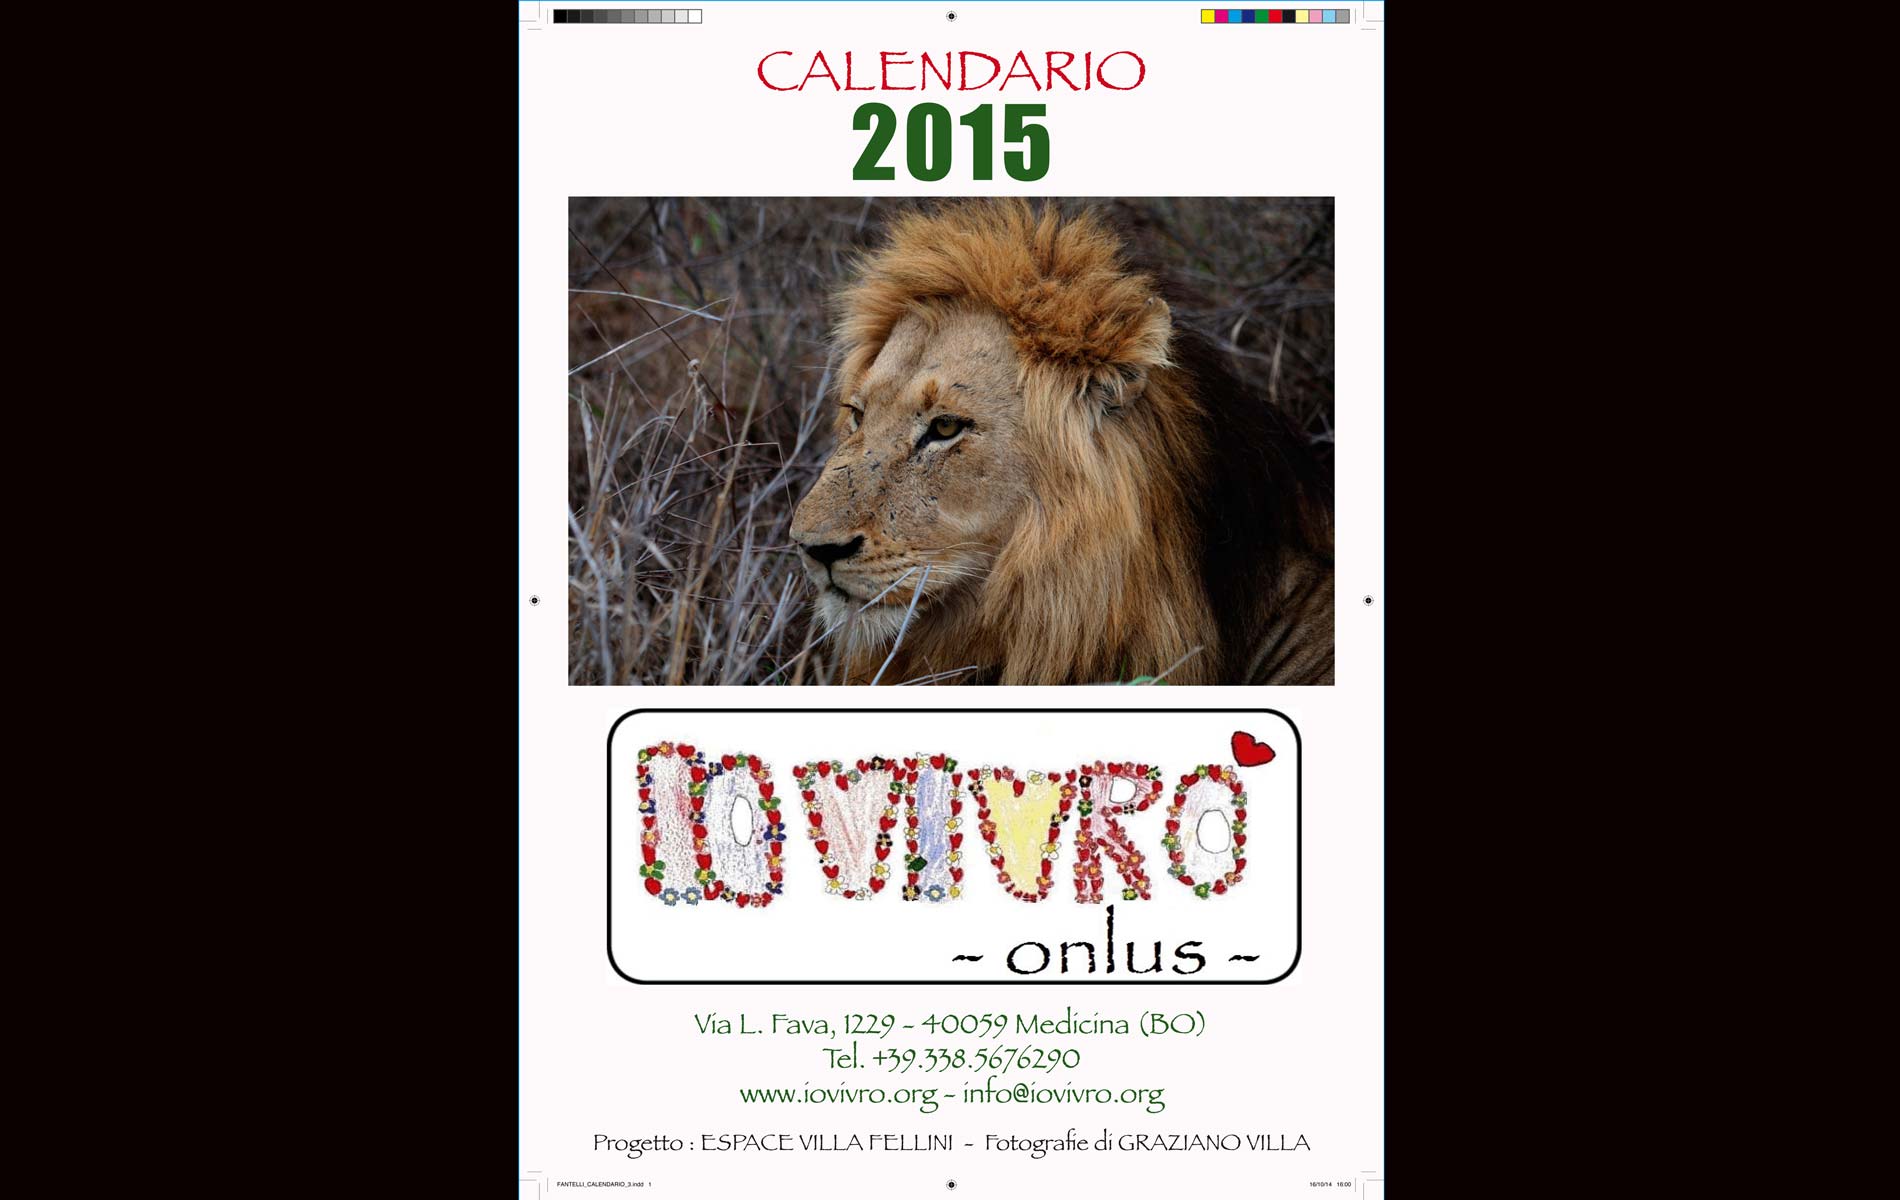 "IO VIVRO' " - onlus - 2015 Calendar Cover - © Graziano Villa